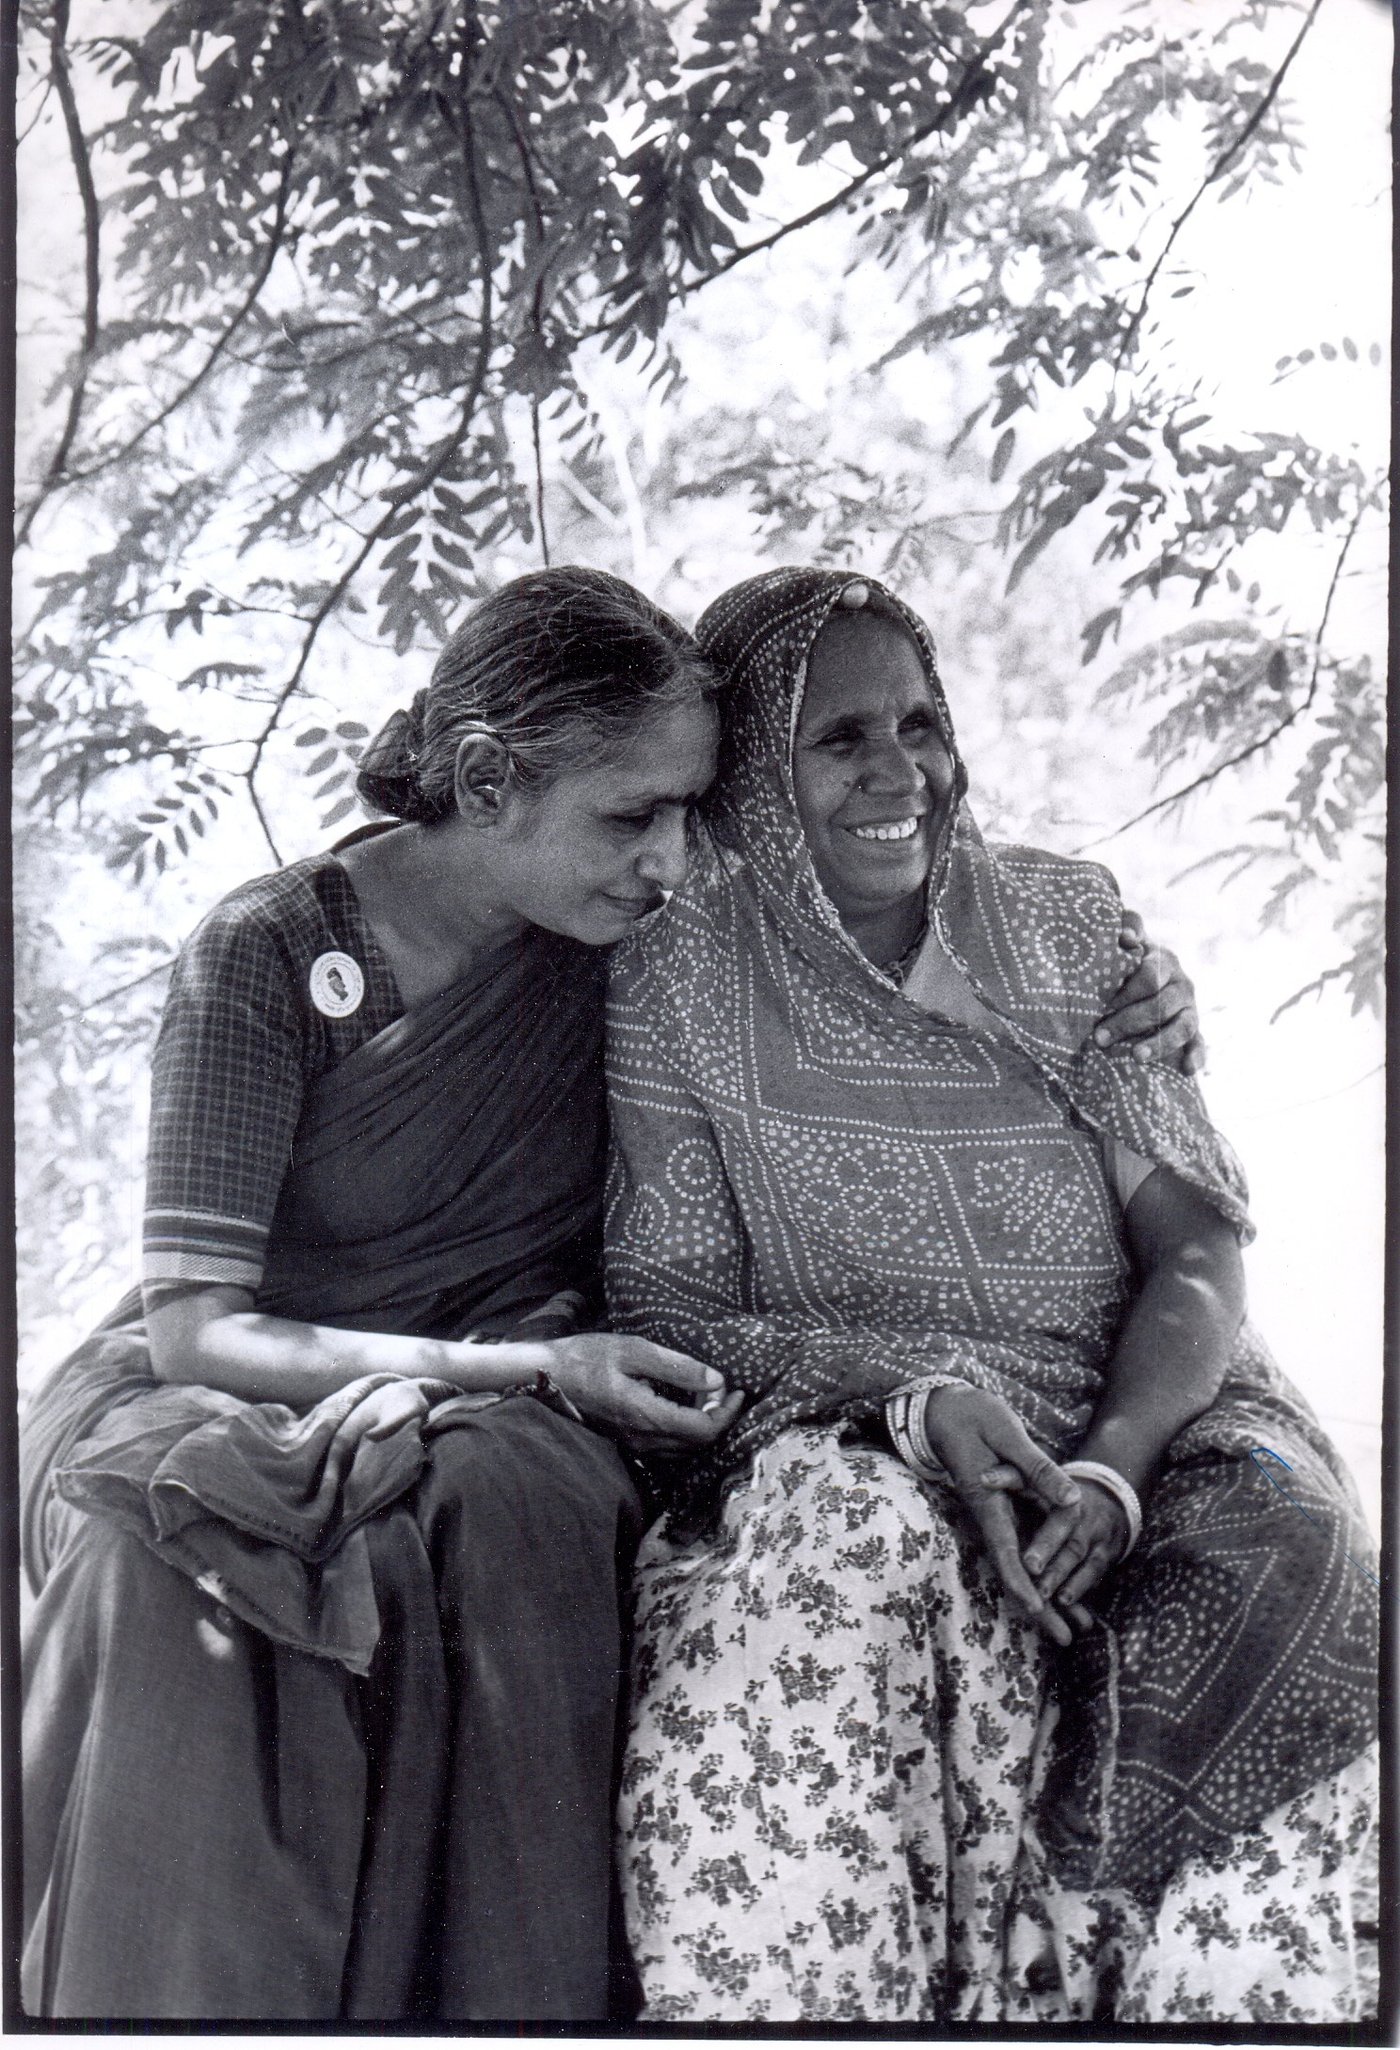 Aruna Roy and Beelan sitting together